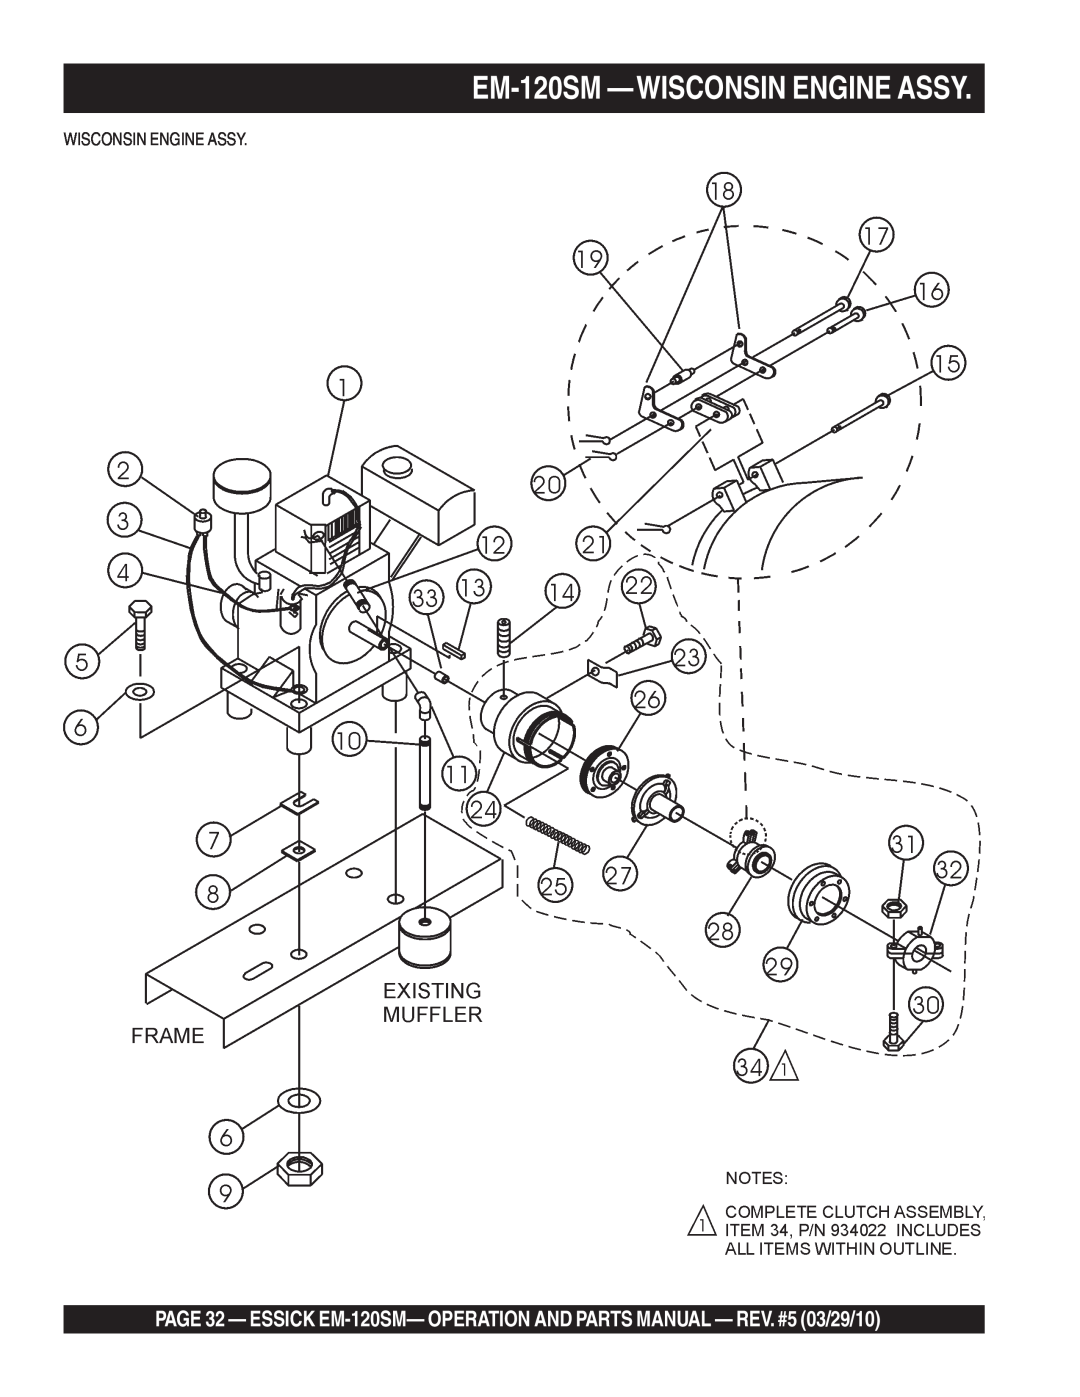 Multiquip manual EM-120SM -WISCONSINENGINE ASSY, Wisconsin Engine Assy 